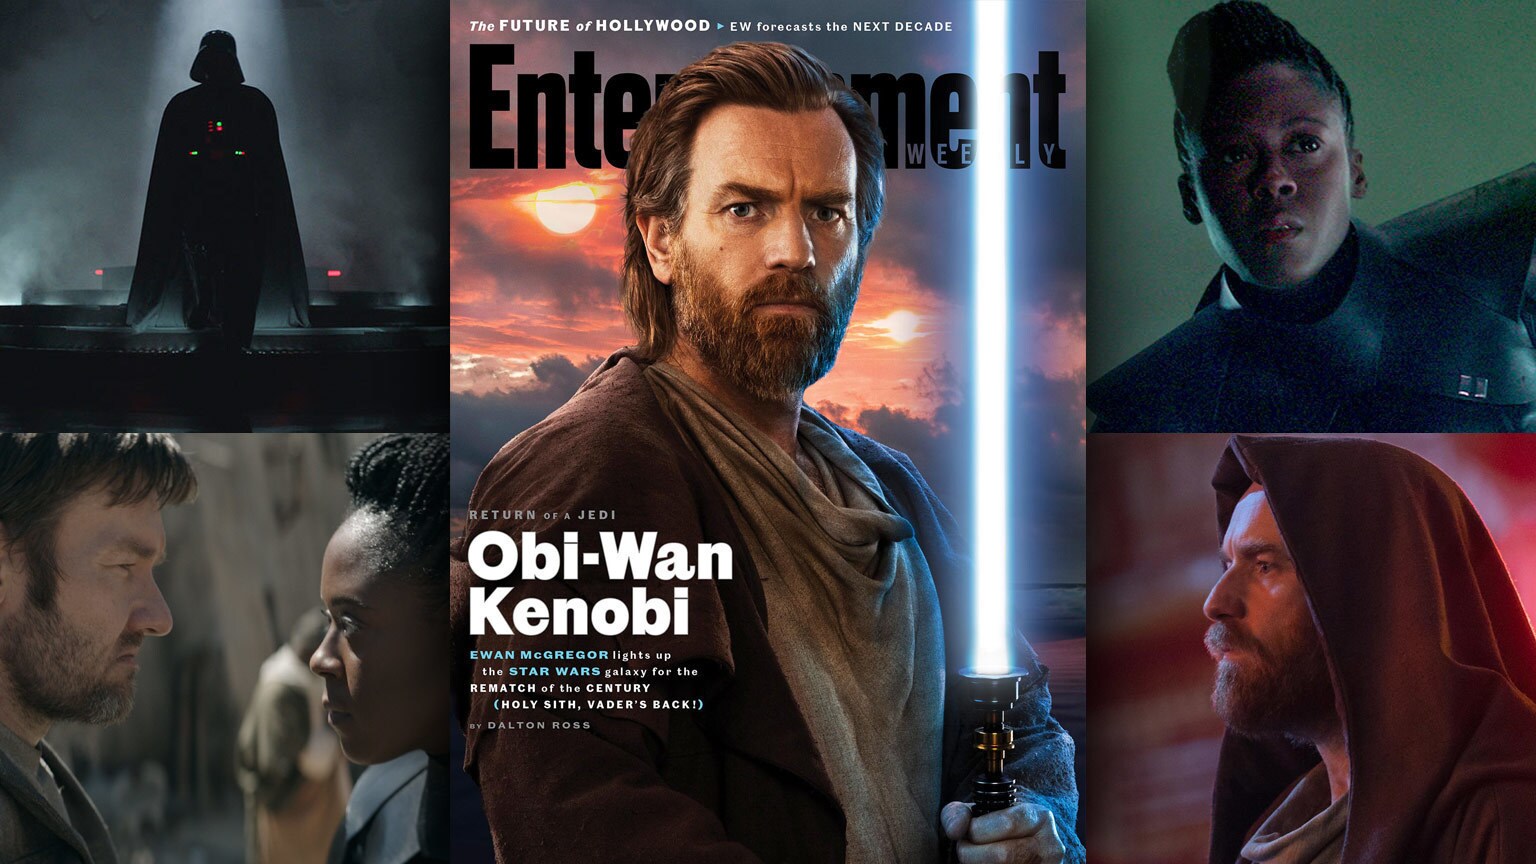 Obi-Wan Kenobi Photos and Details Revealed